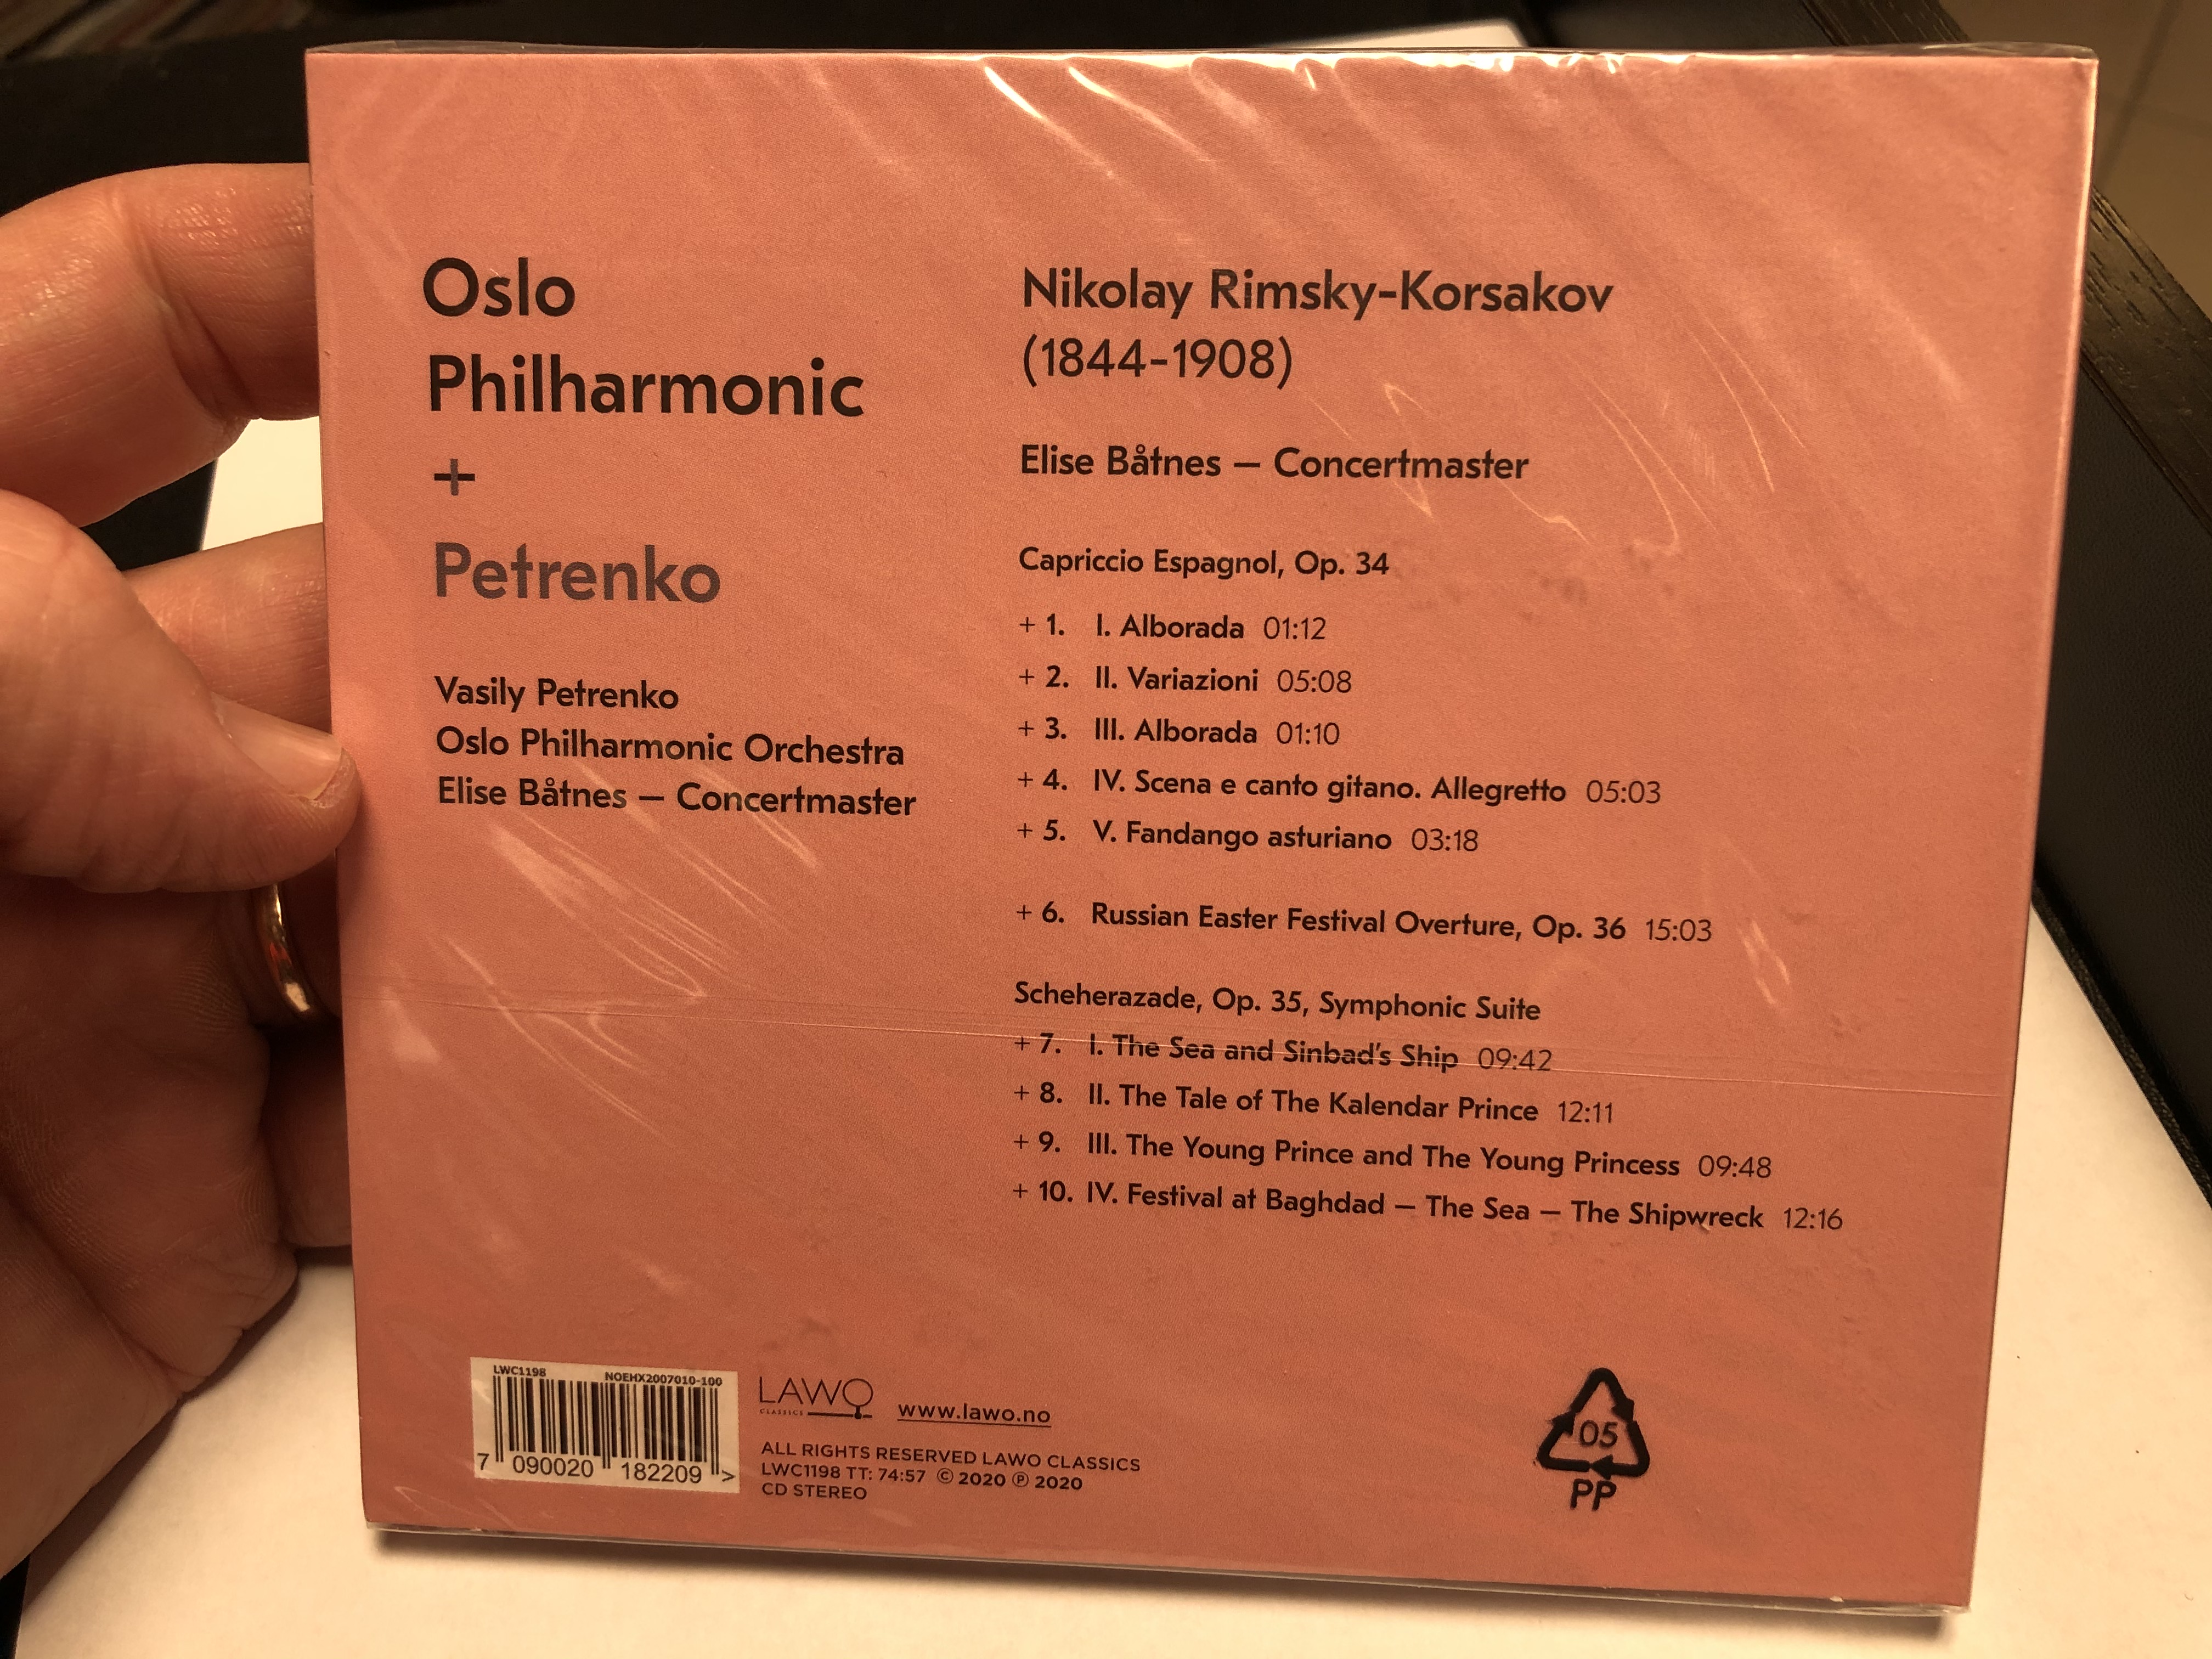 oslo-philharmonic-petrenko-nikolay-rimsky-korsakov-capriccio-espagnol-op.-34-russian-easter-festival-overture-op.-36-scheherazade-op.-35-vasily-petrenko-oslo-philharmonic-orches.jpg